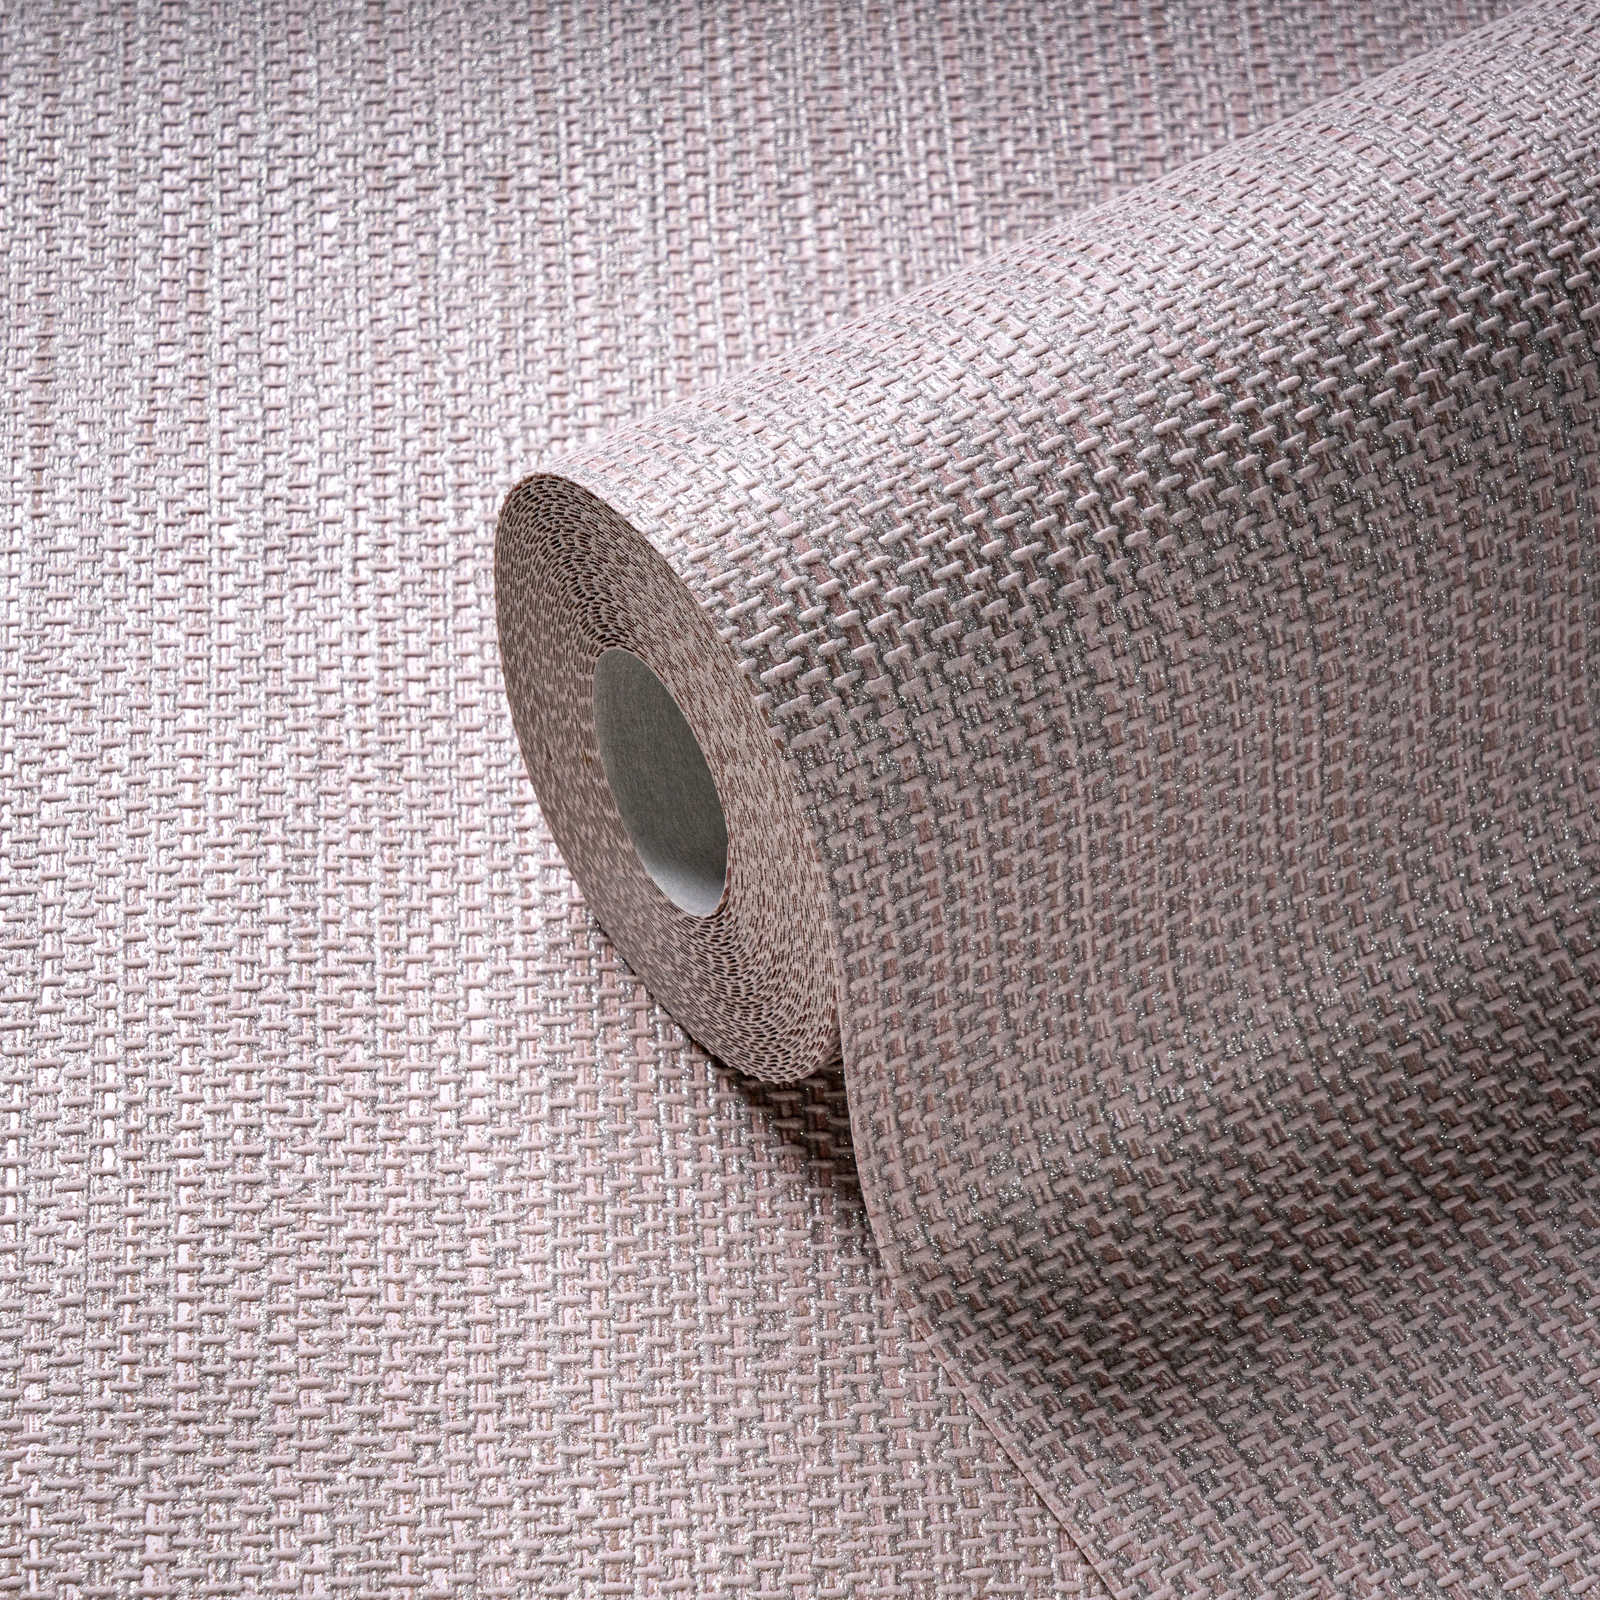             Strukturierte Vliestapete in Textiloptik – Rosa, Silber
        